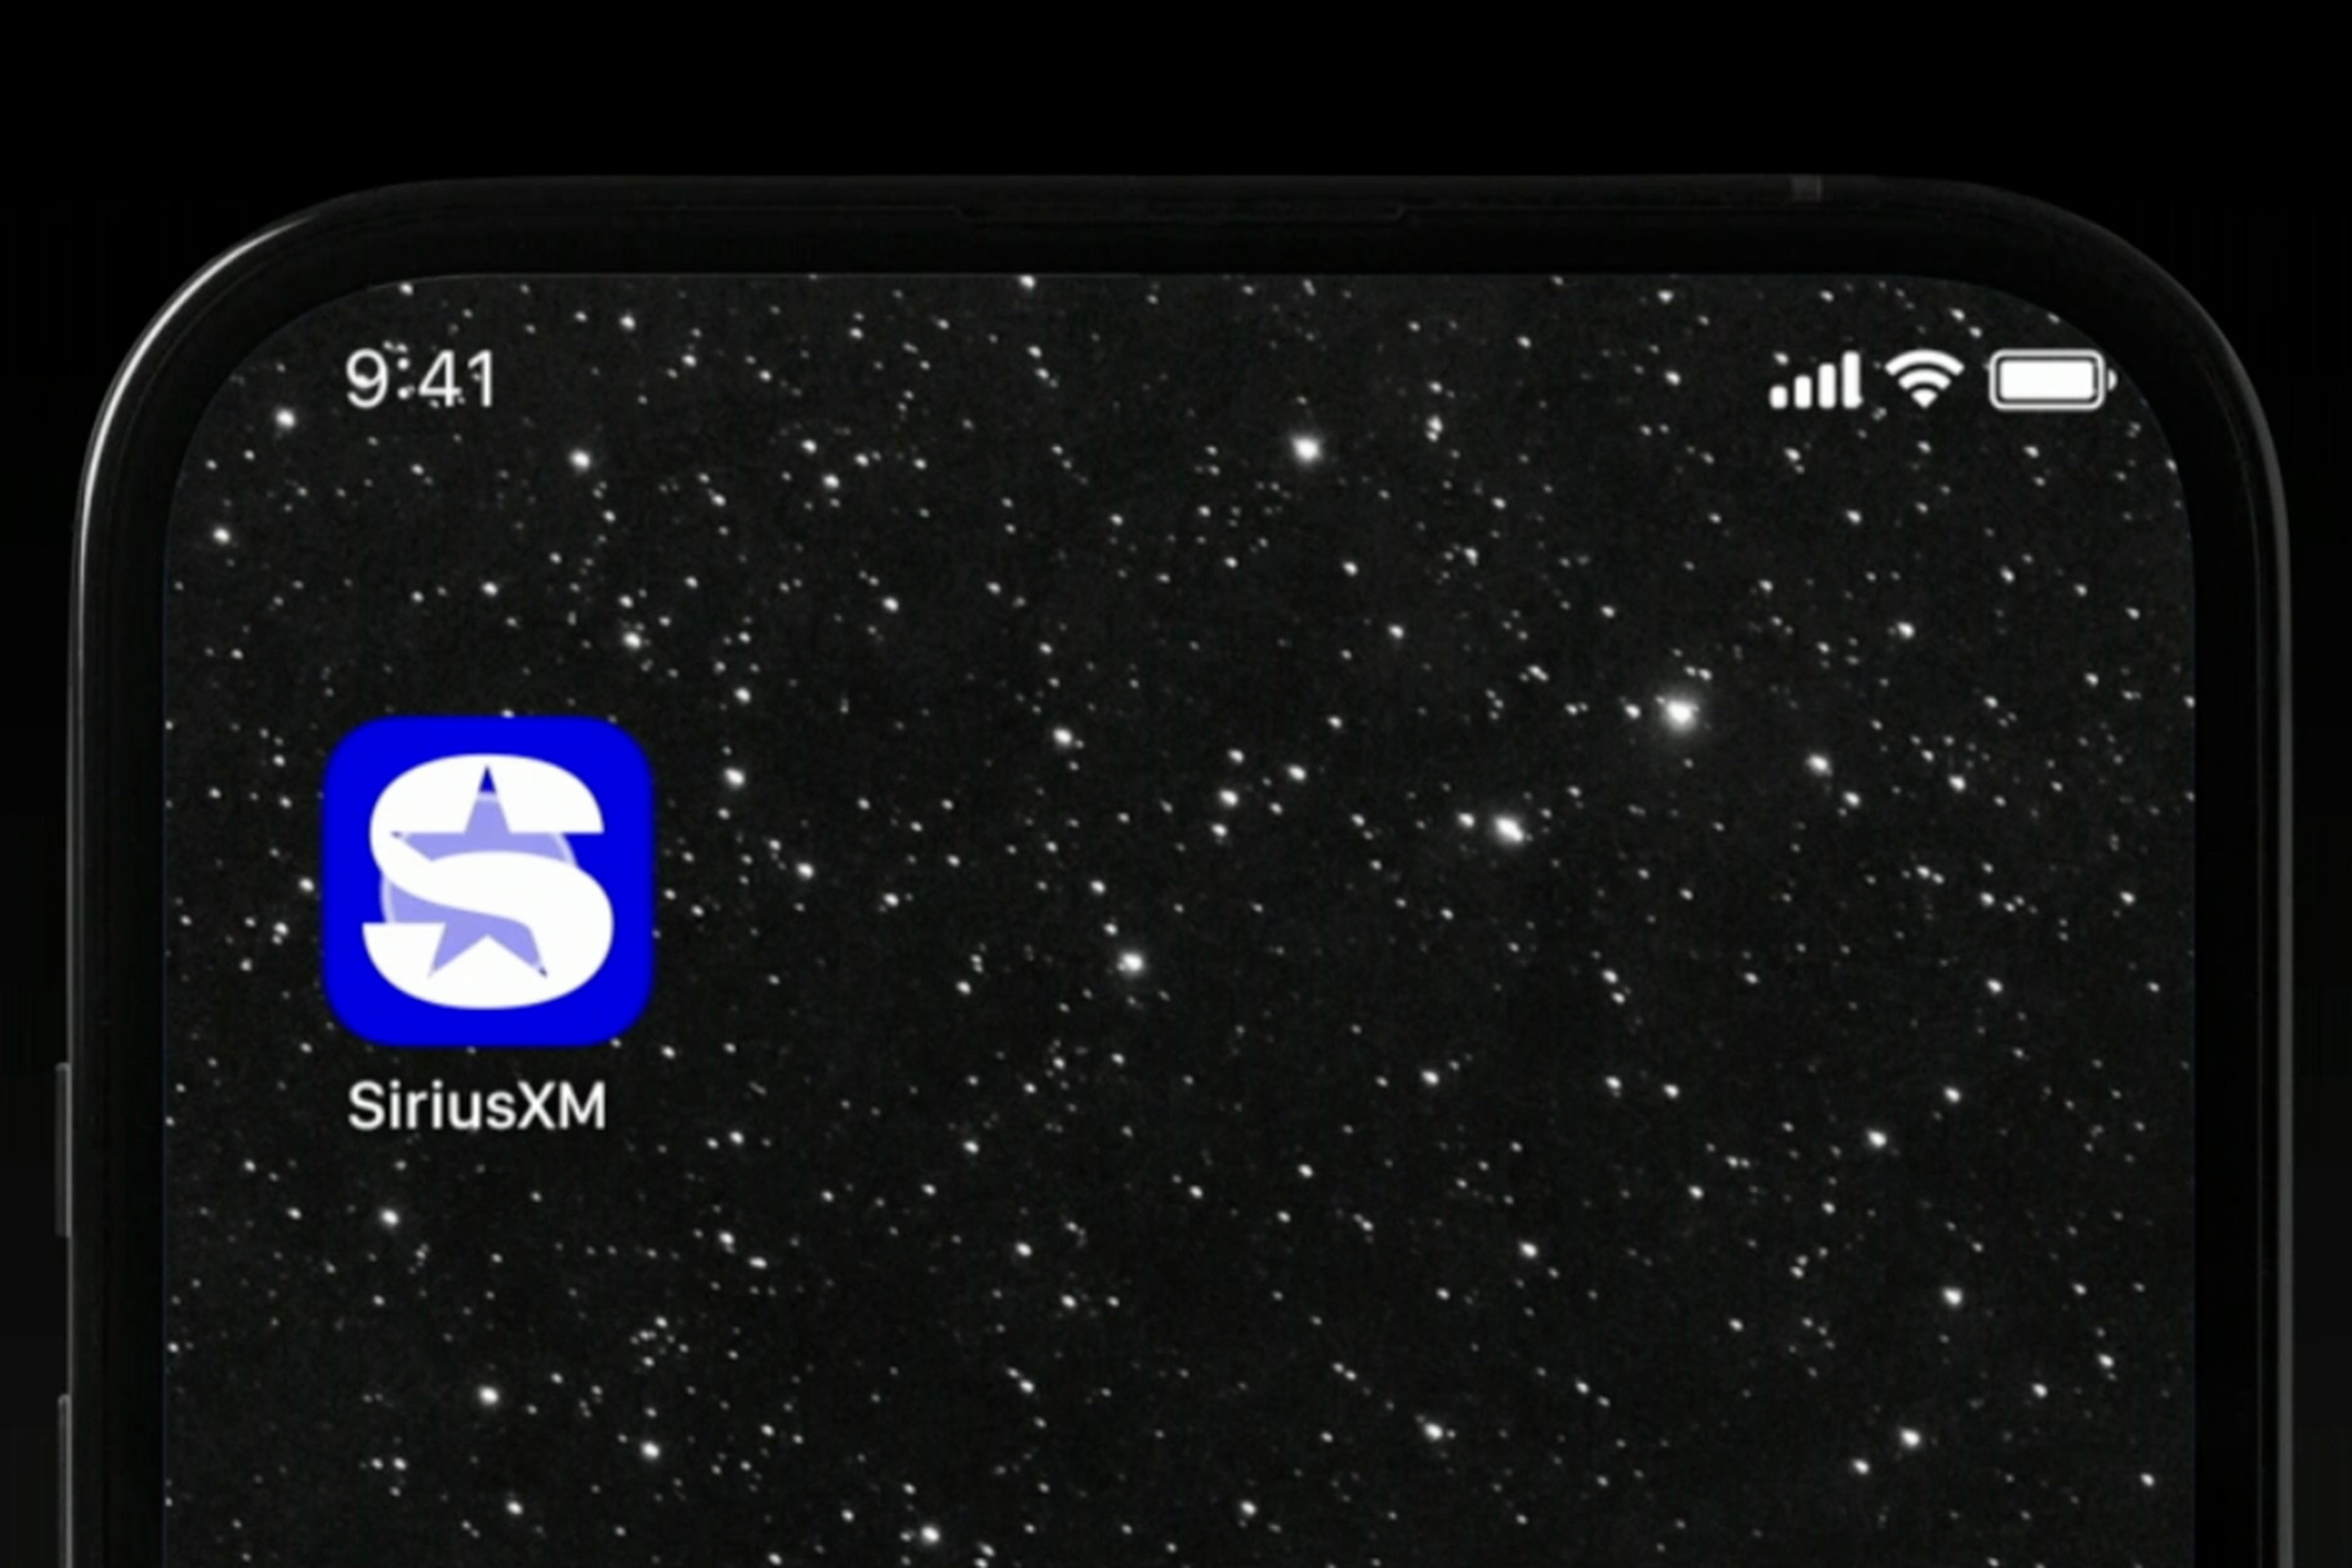 SiriusXM’s new logo and app icon.